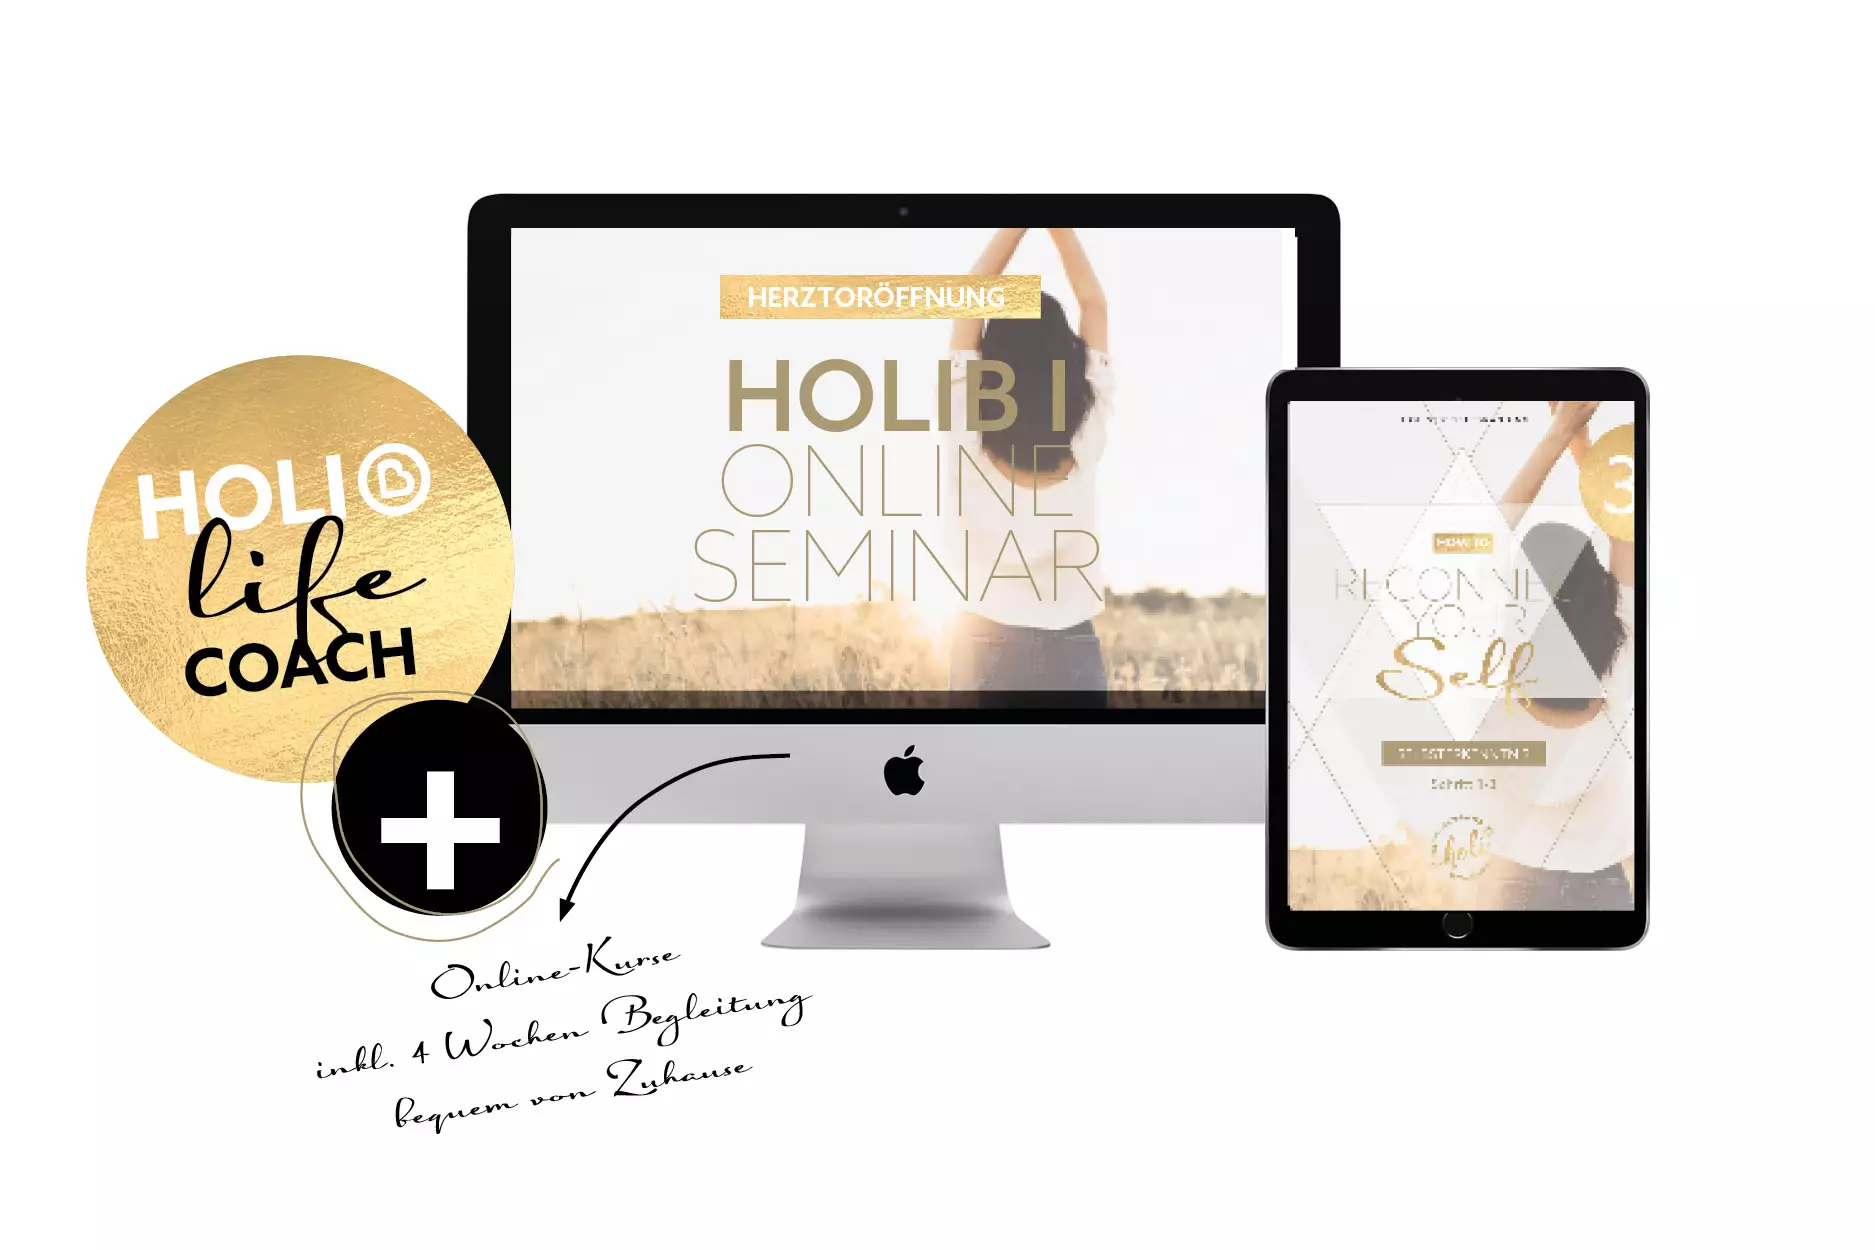 Seminar HOLI B I - Online